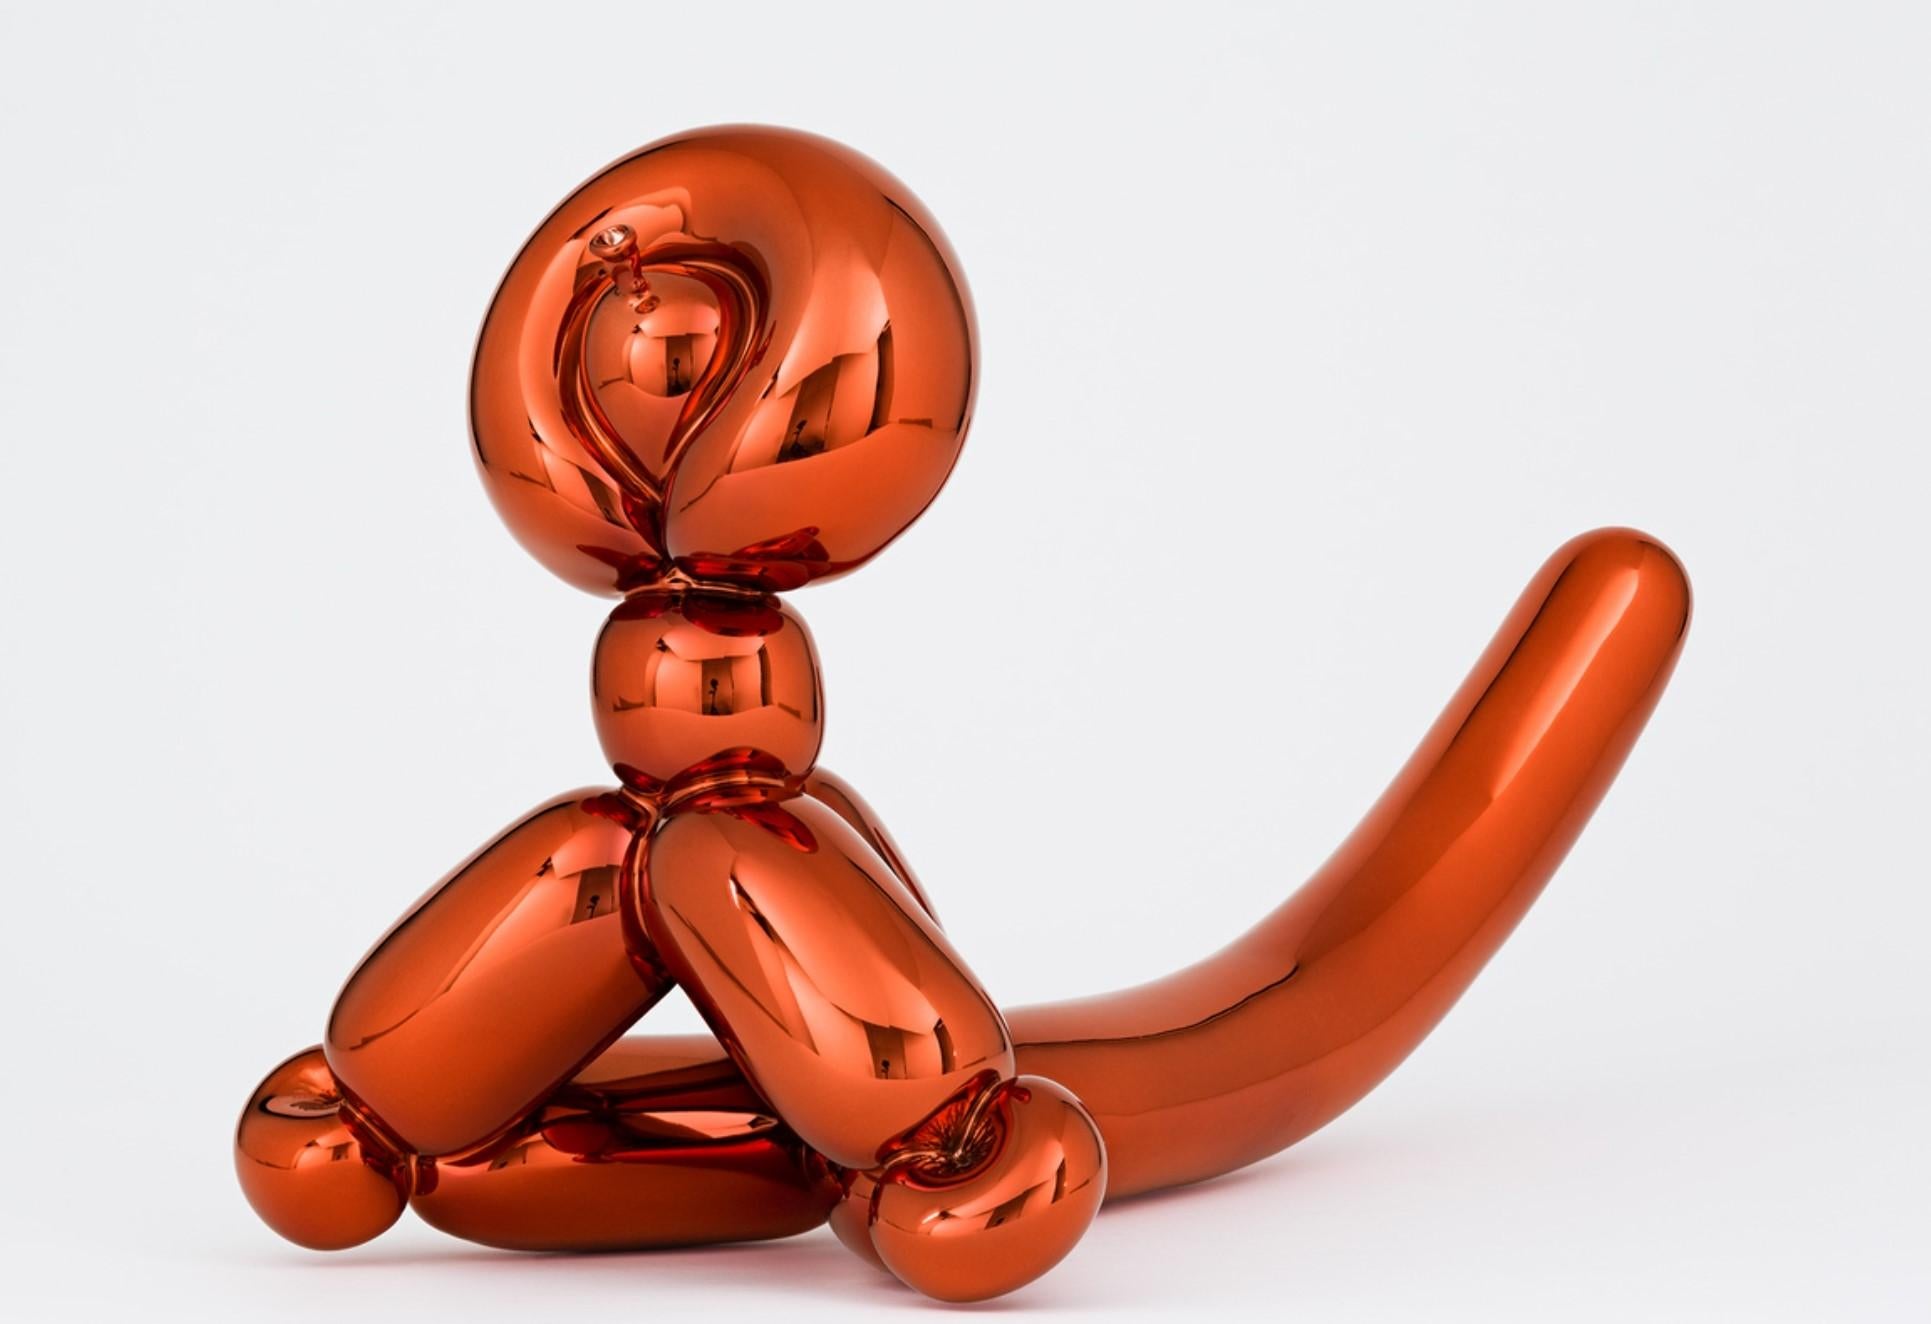 Ballon Monkey Orange - Sculpture de Jeff Koons